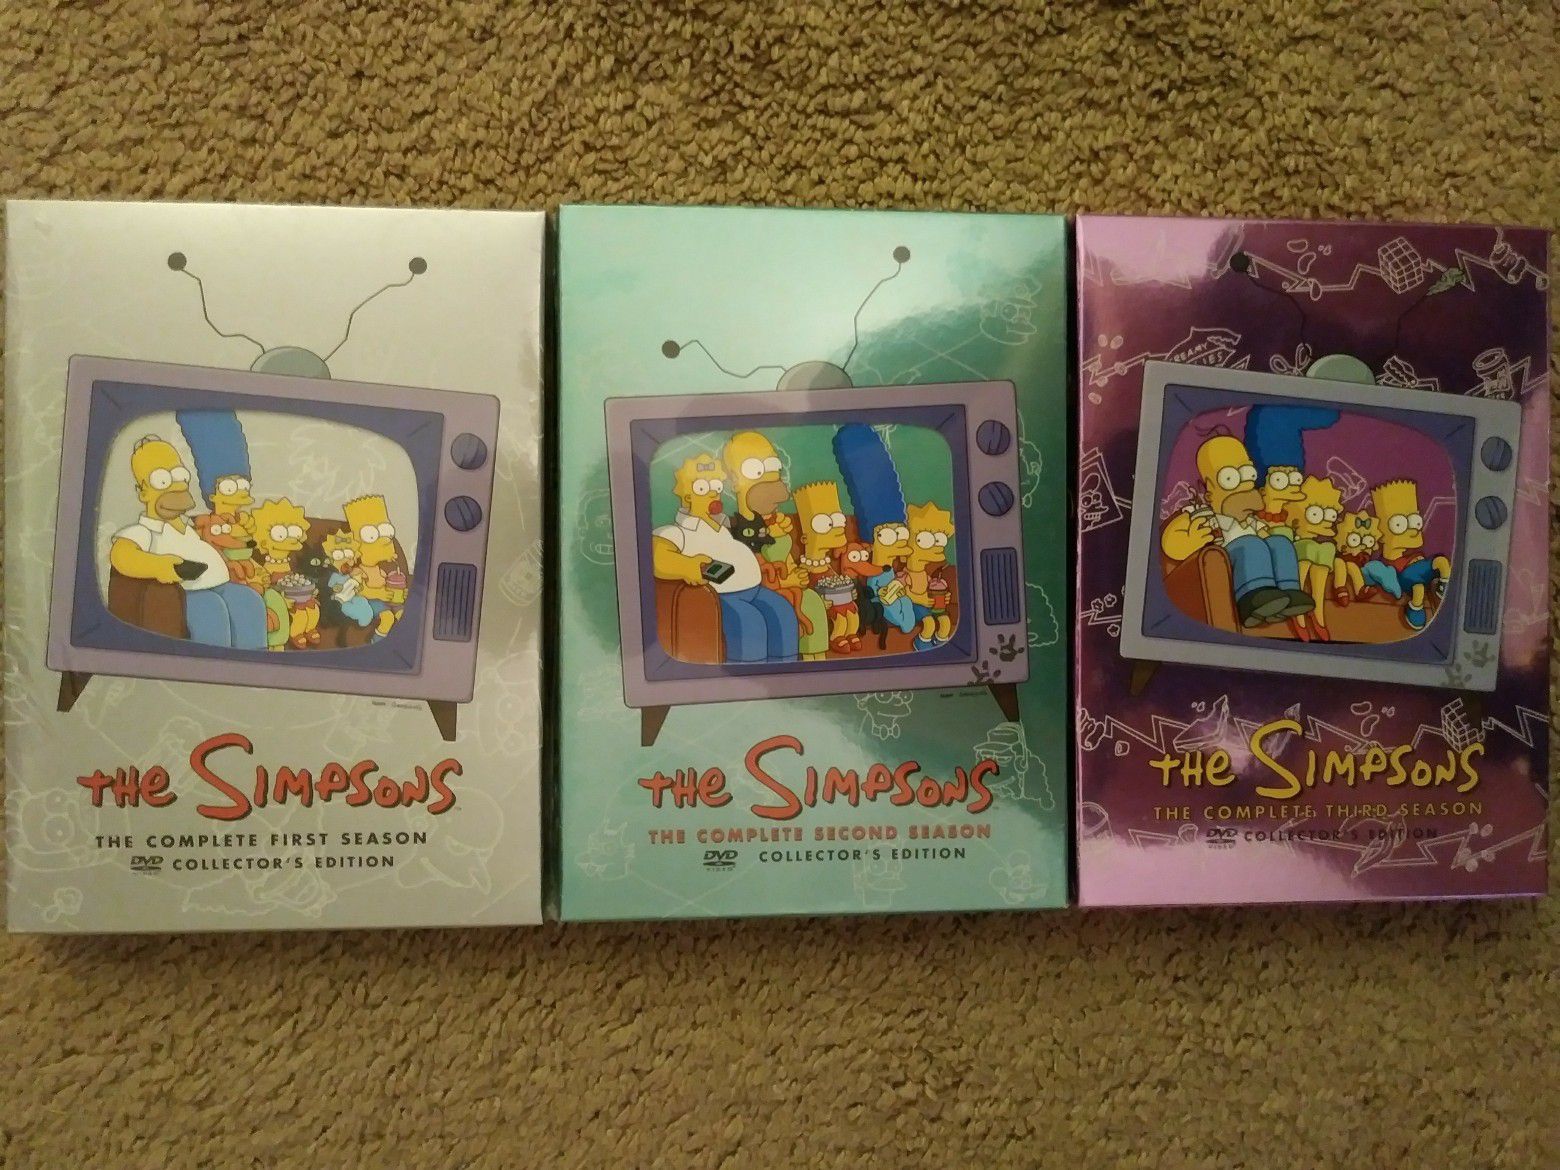 The Simpson's season 1-3